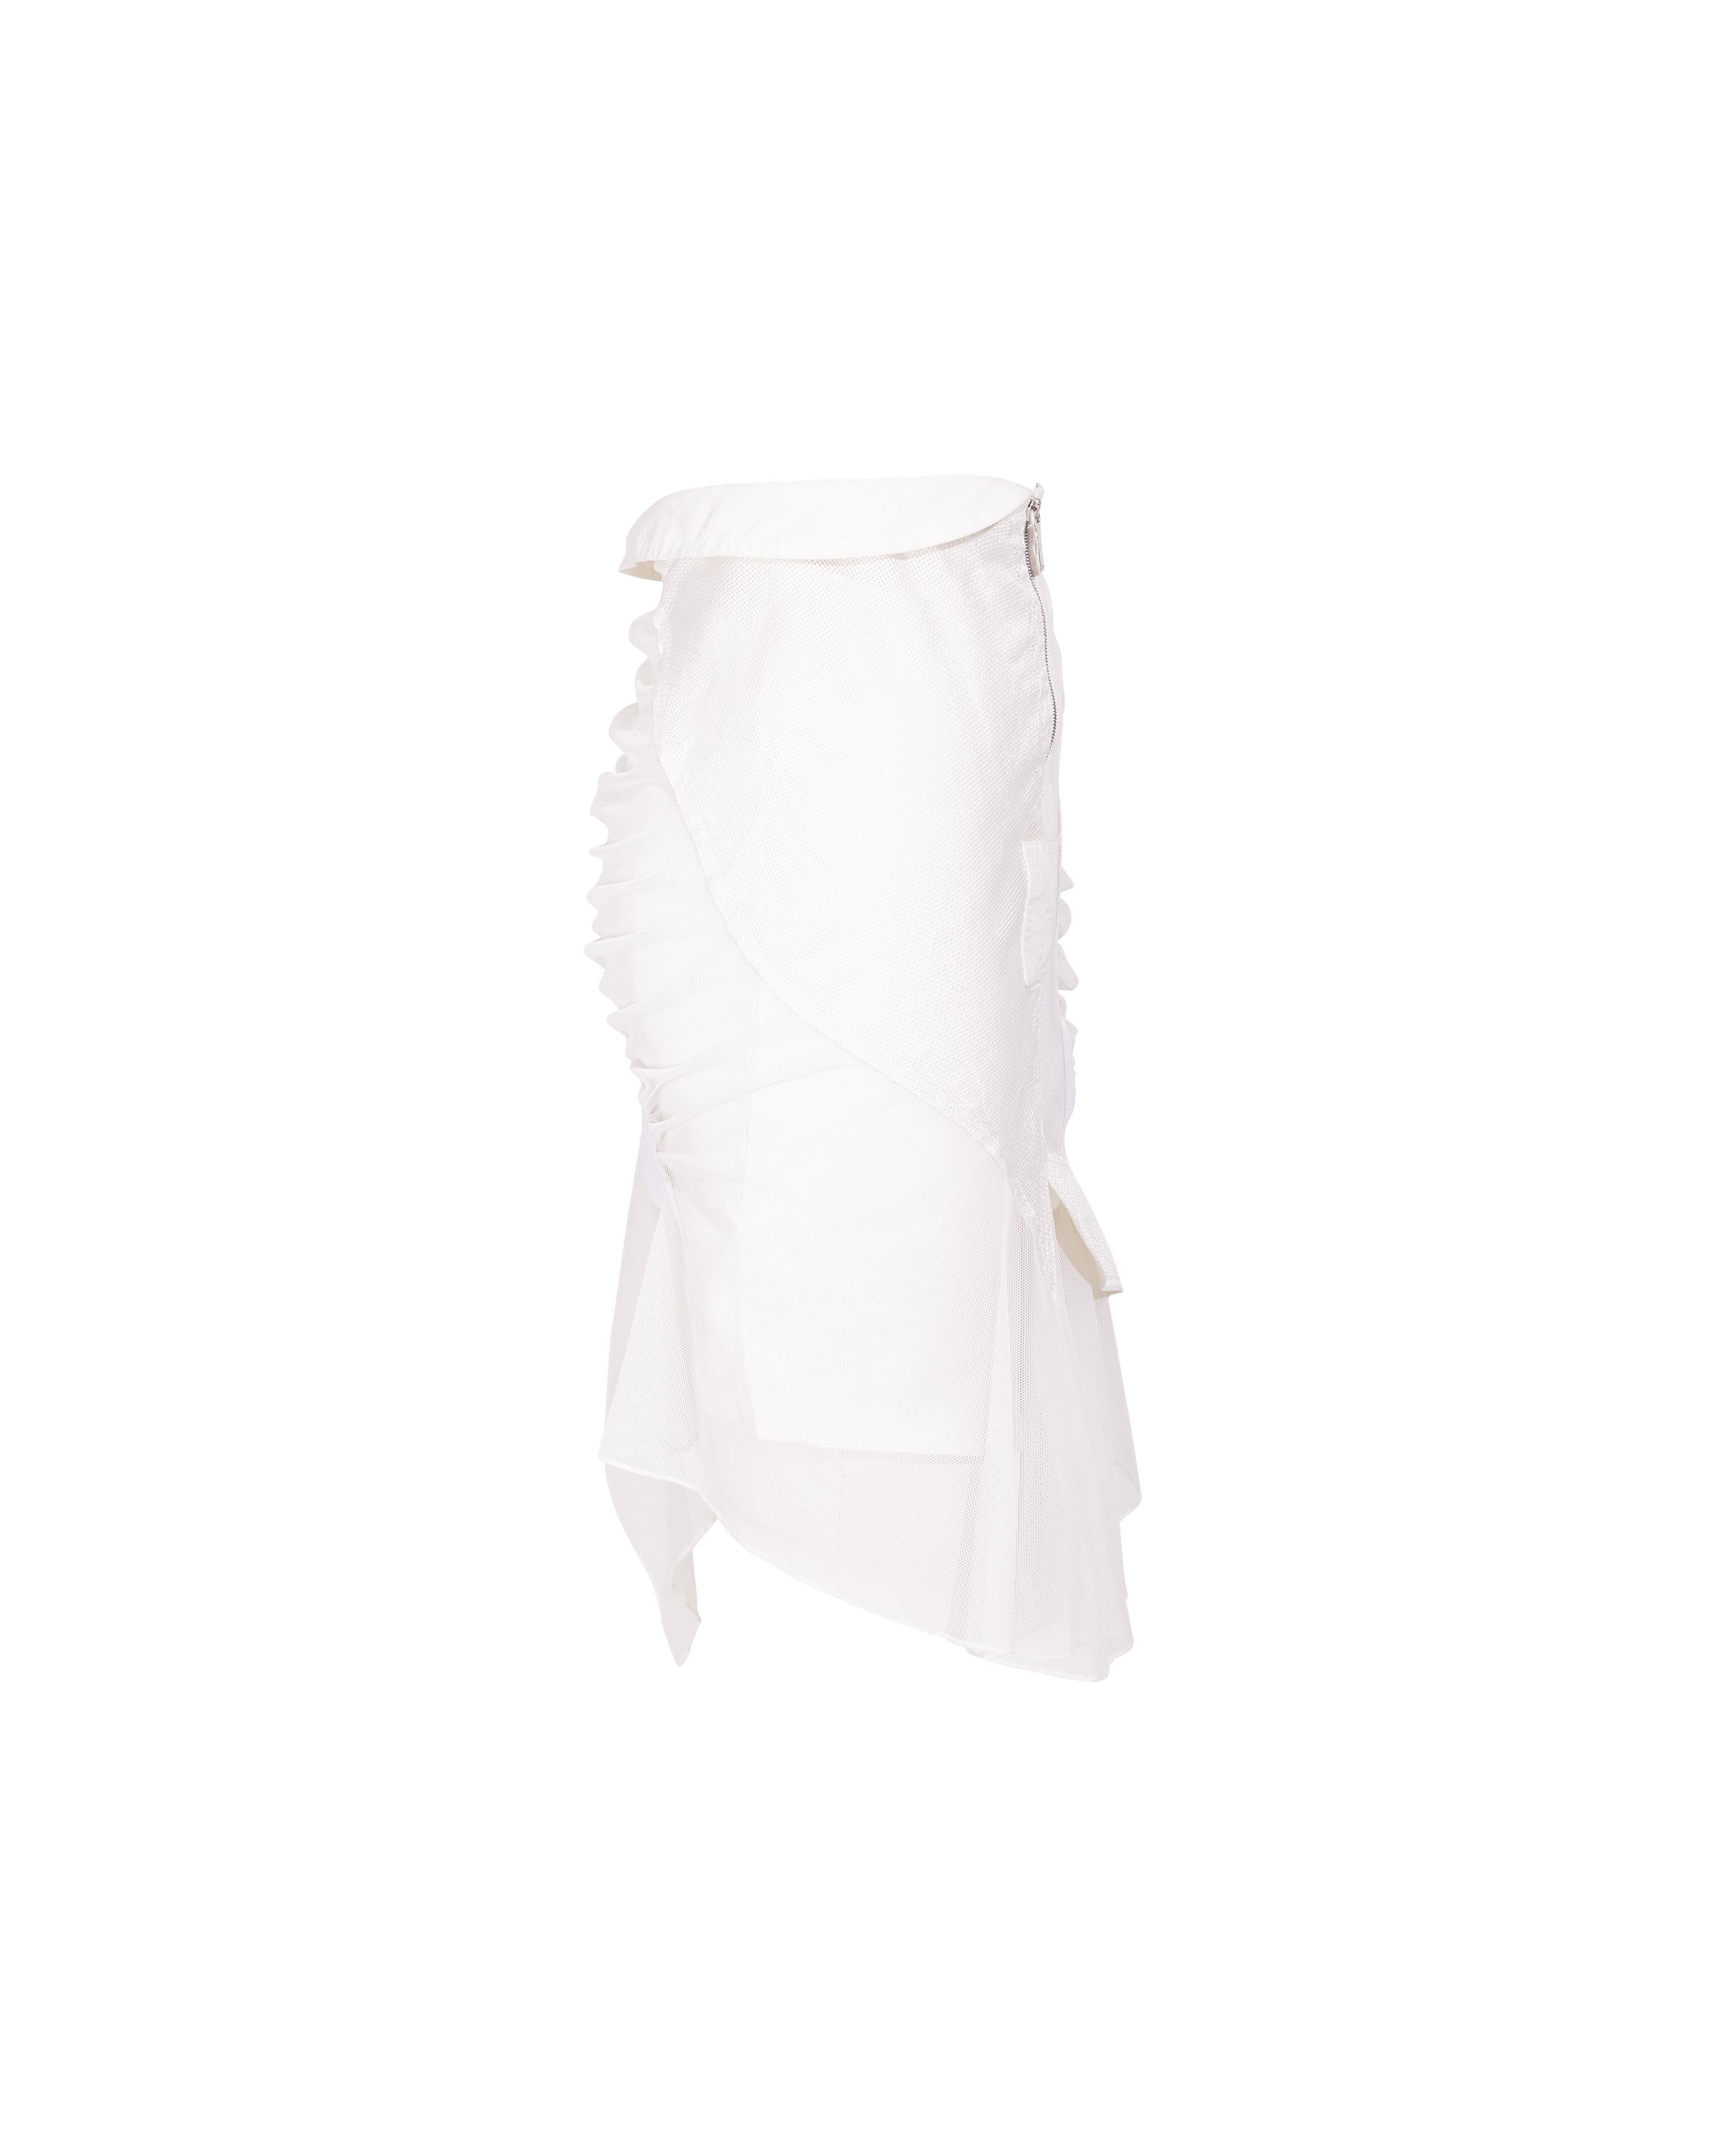 Women's S/S 2002 Christian Dior by John Galliano White Asymmetrical Deconstructed Skirt